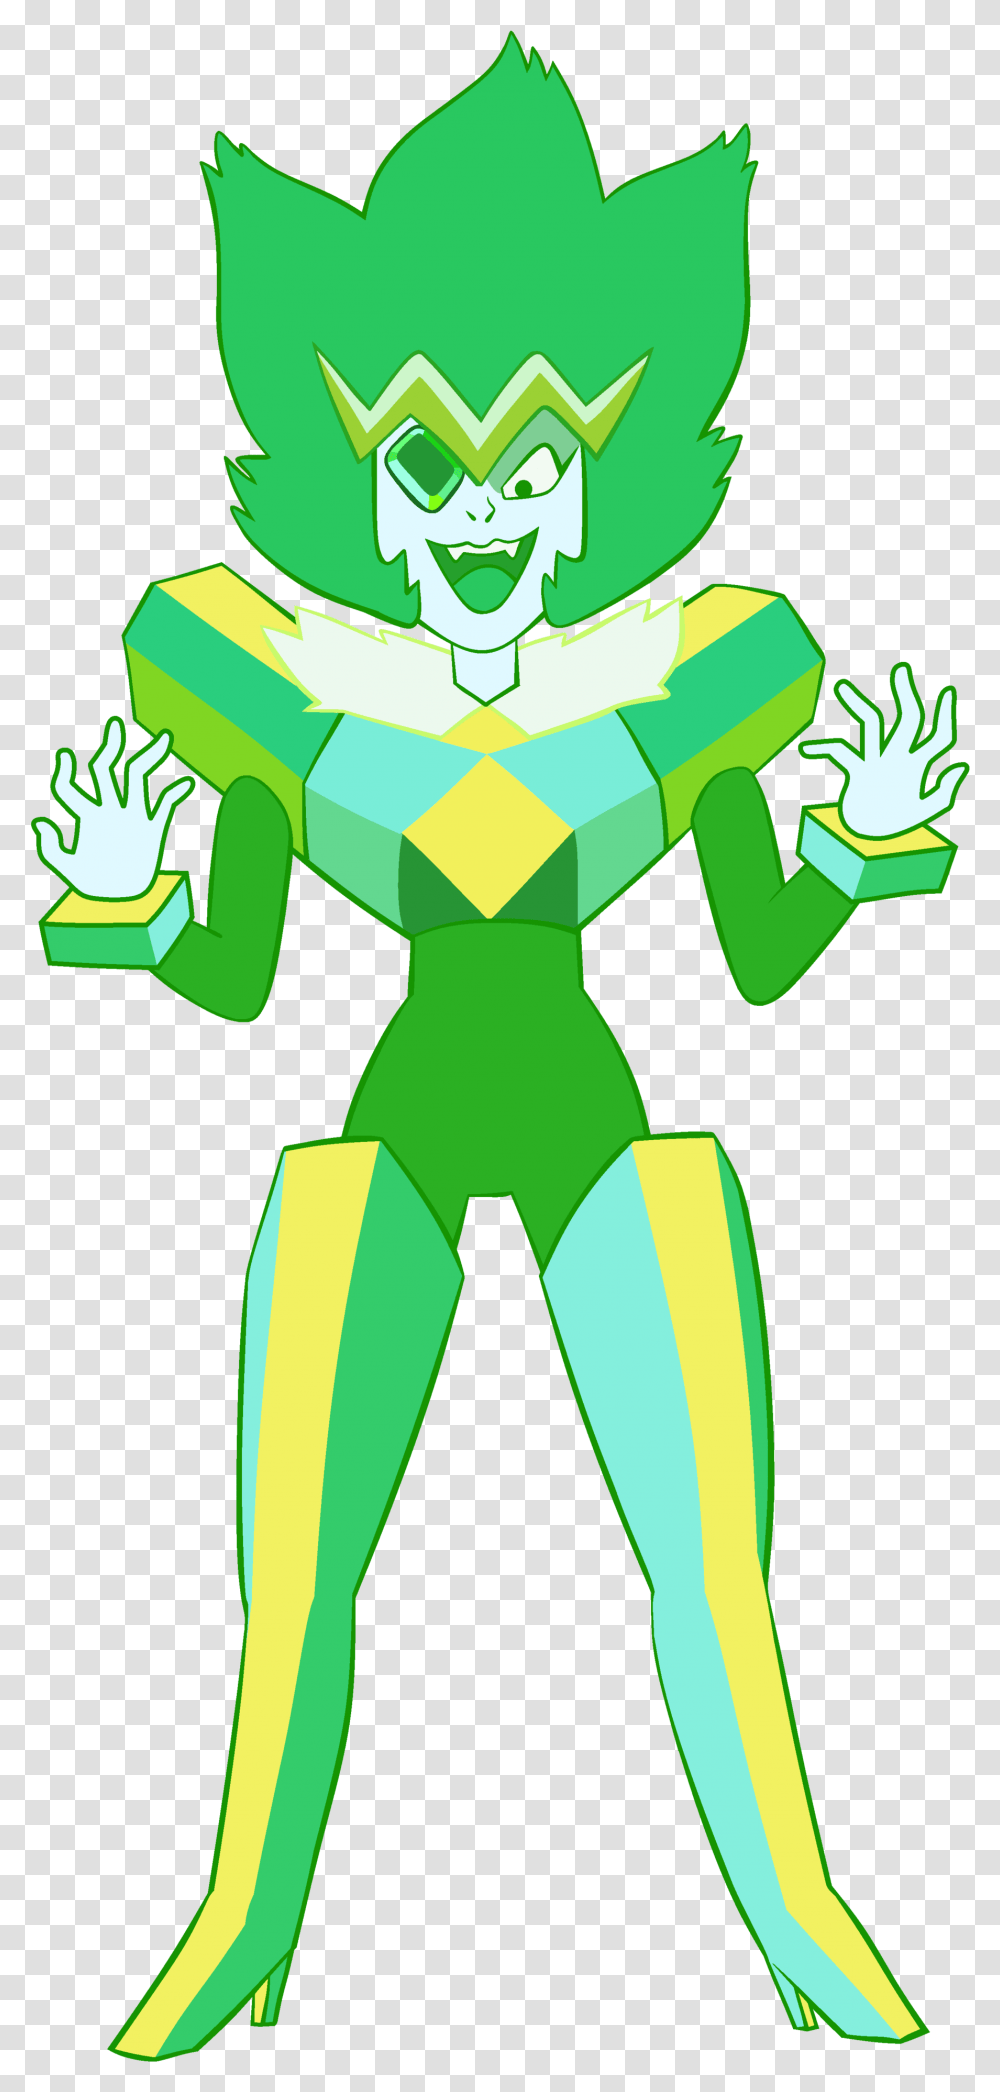 Unibrow Full Body Steven Universe Emerald, Green, Alien, Elf, Recycling Symbol Transparent Png